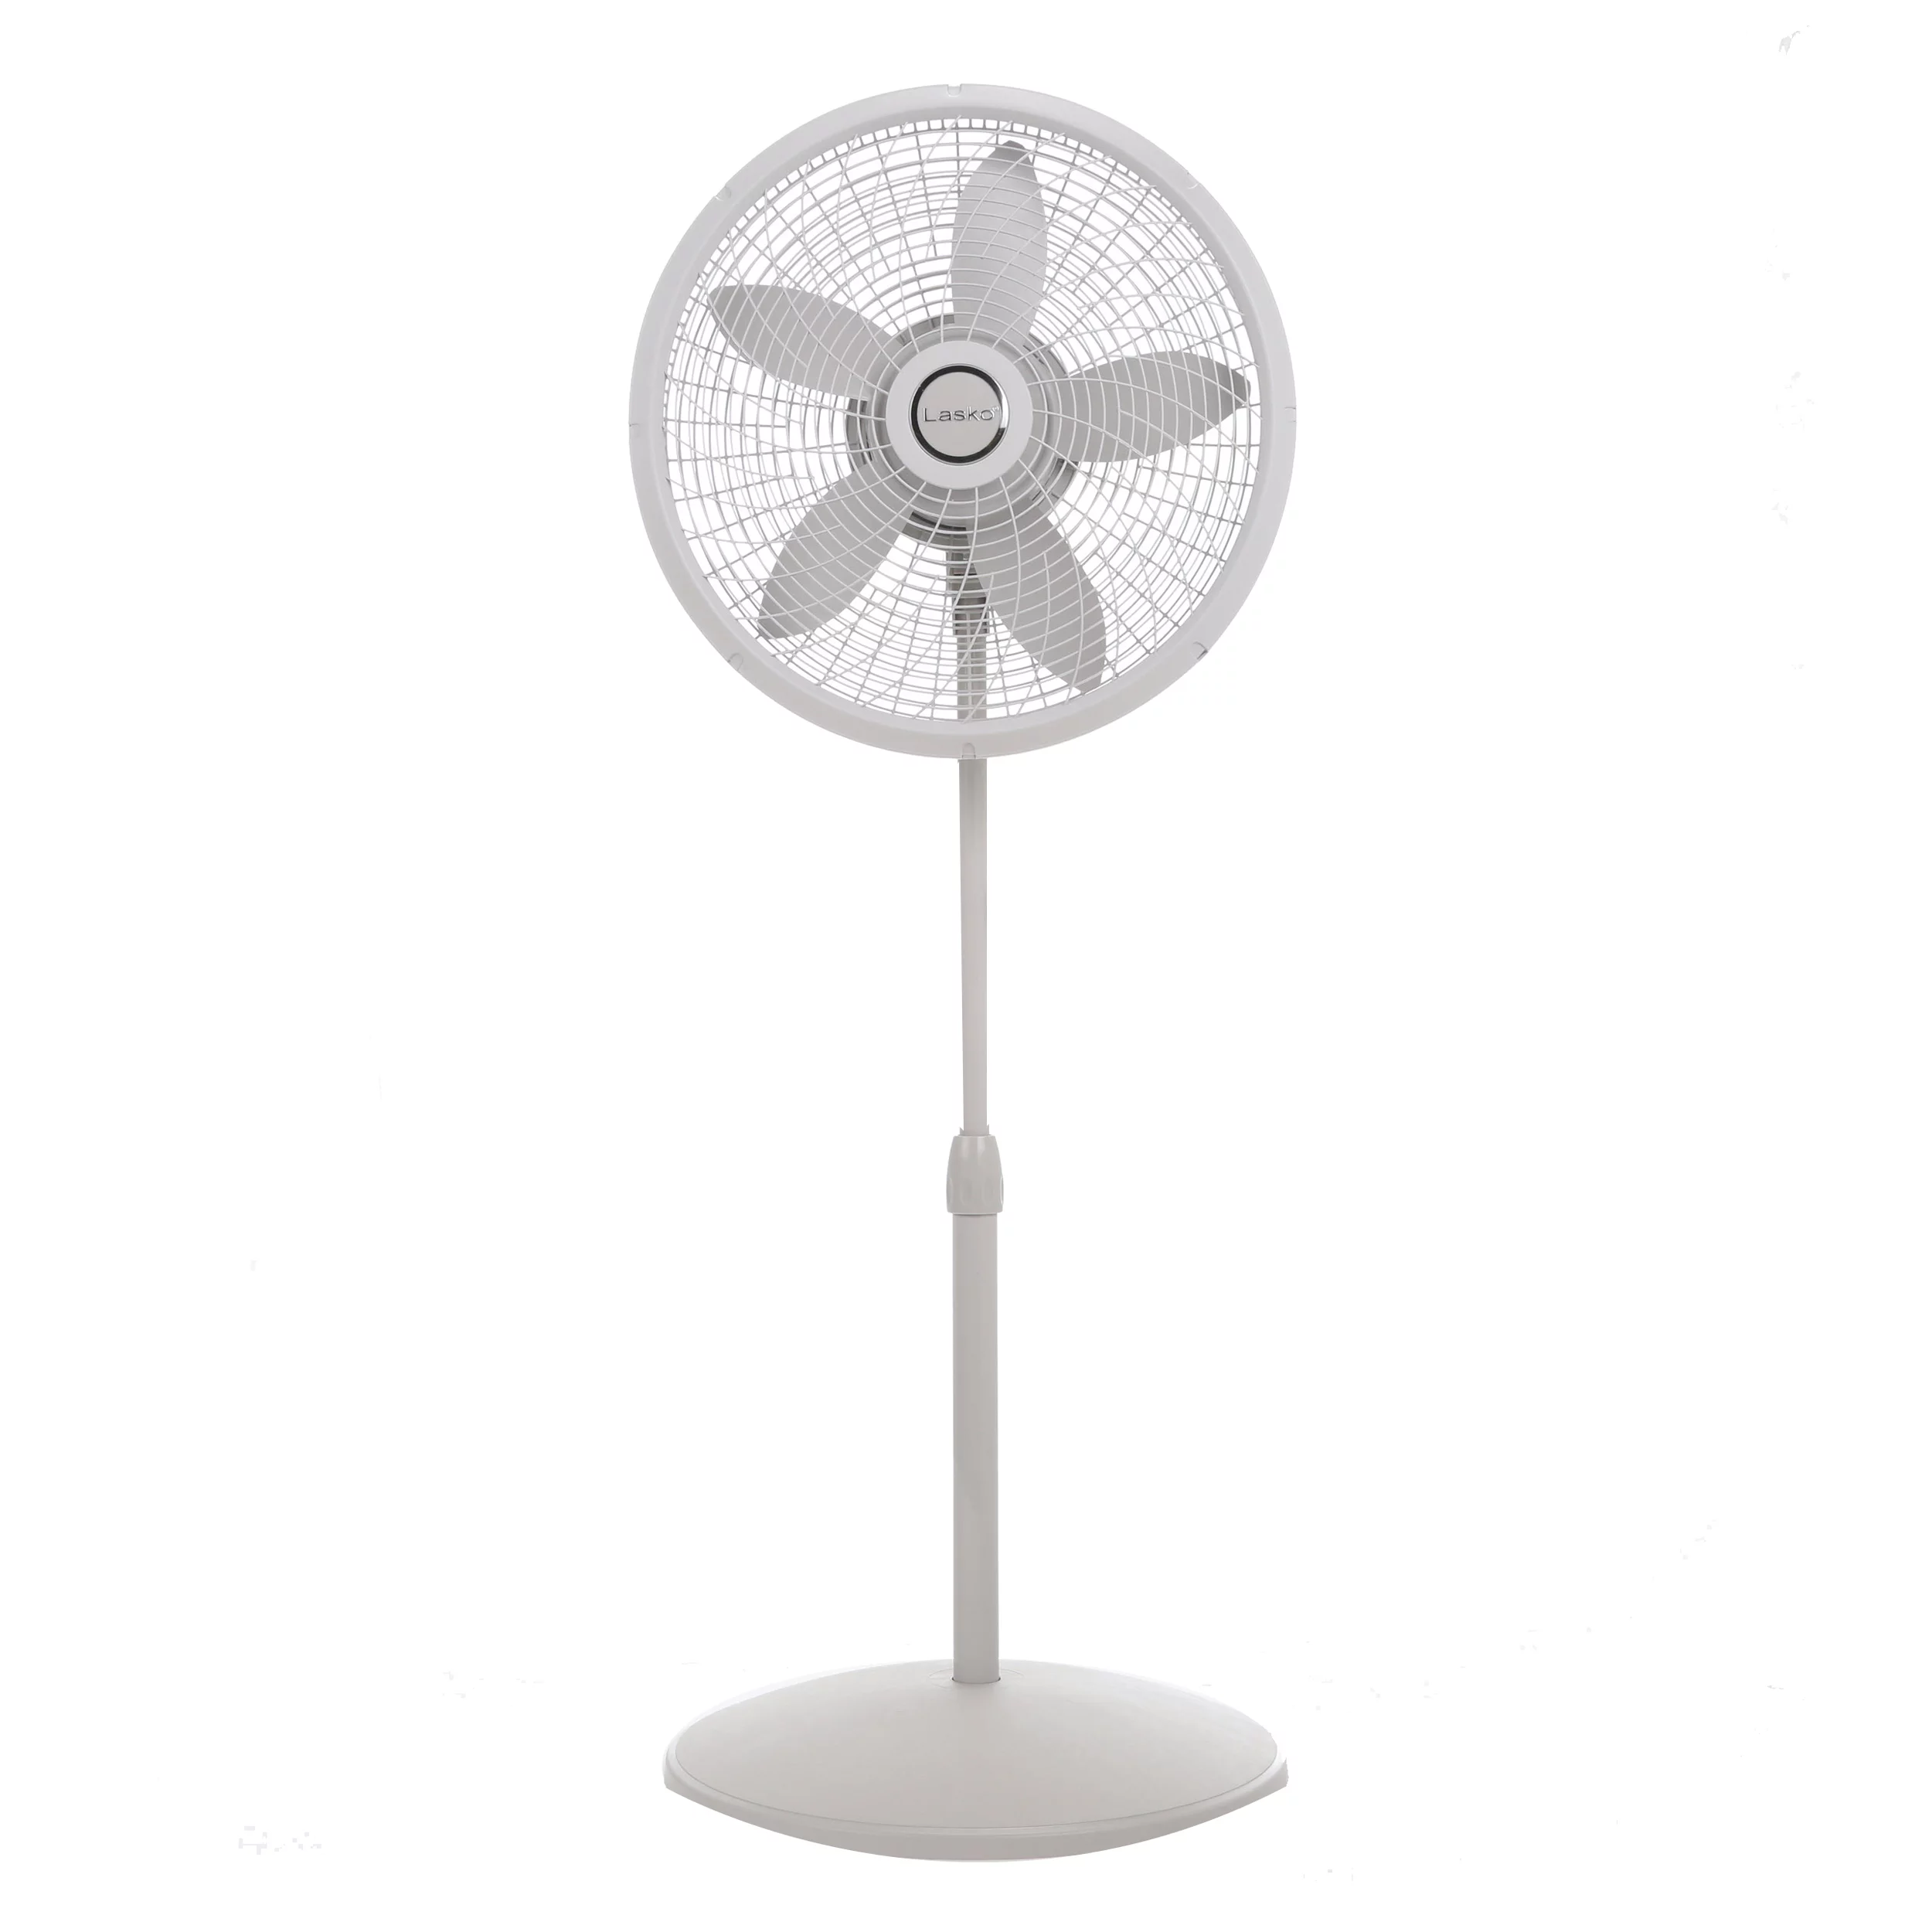 Lasko 18" Adjustable Cyclone Pedestal Fan with 3 Speeds, S18902, Gray